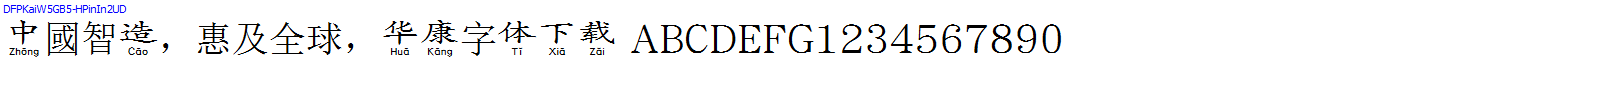 華康字體DFPKaiW5GB5-HPinIn2UD.TTF